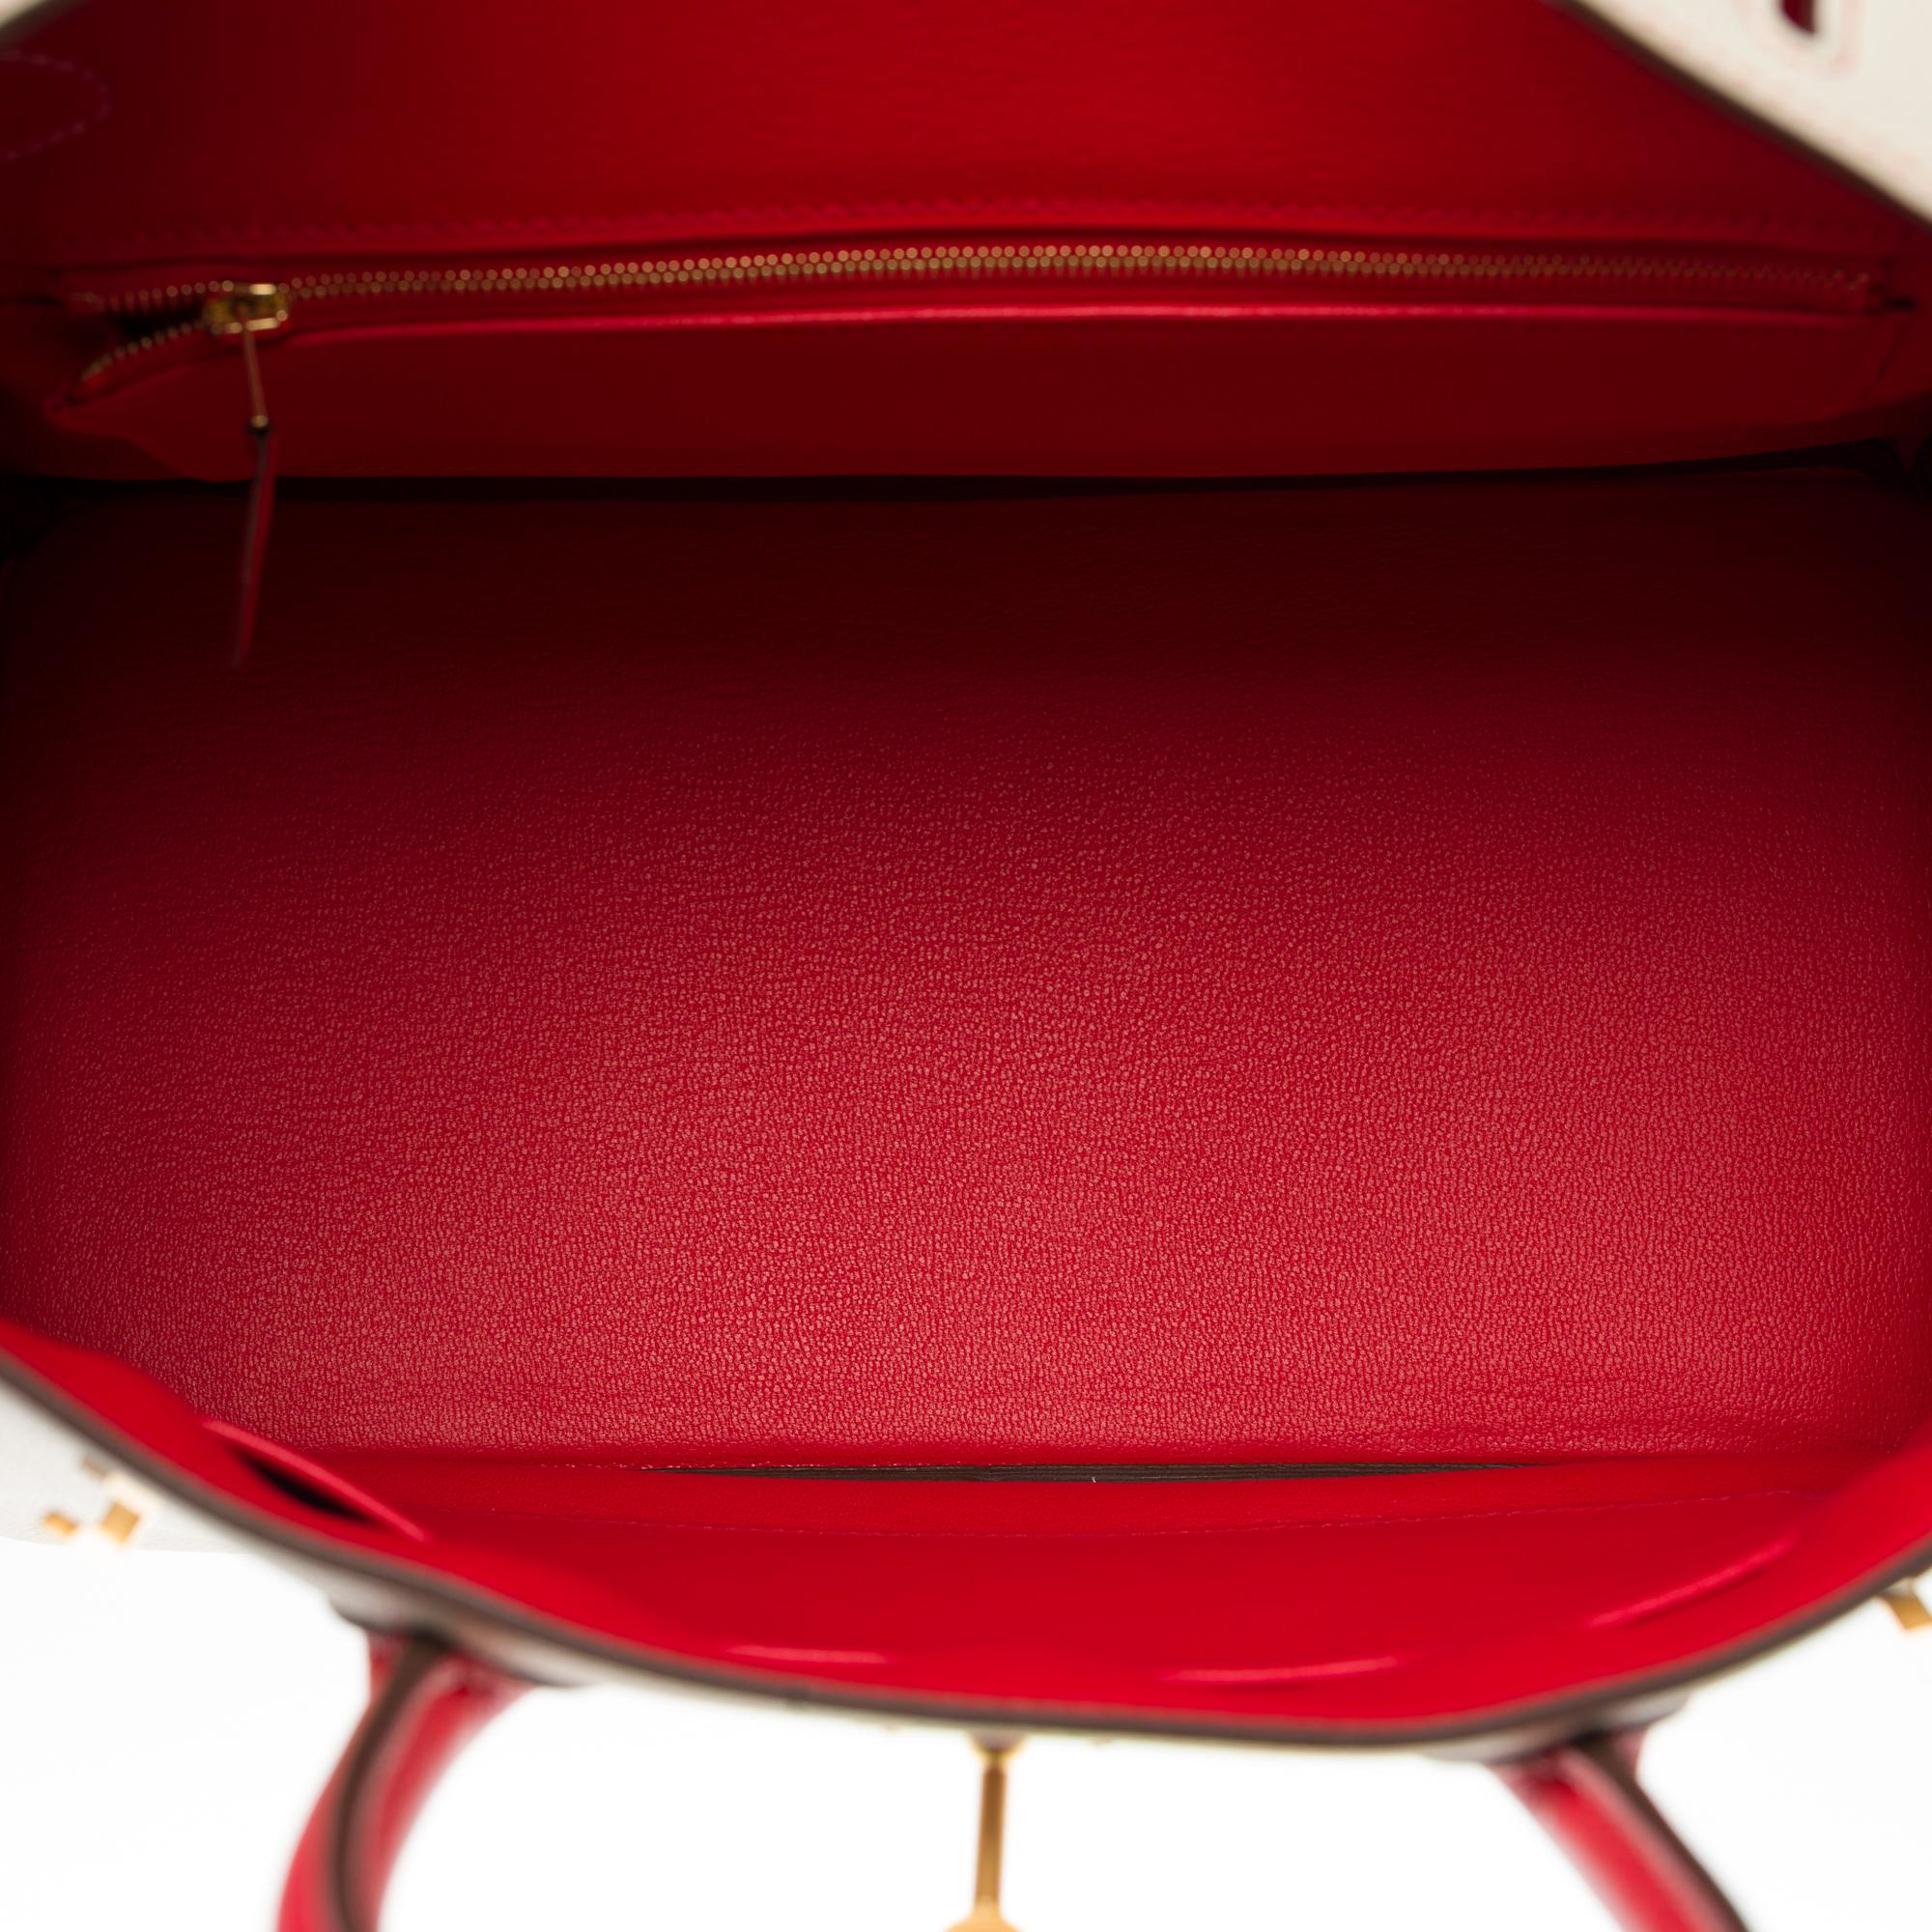  Hermès Birkin 30 HSS Special Order handbag in Craie/Red Togo leather, PHW 3